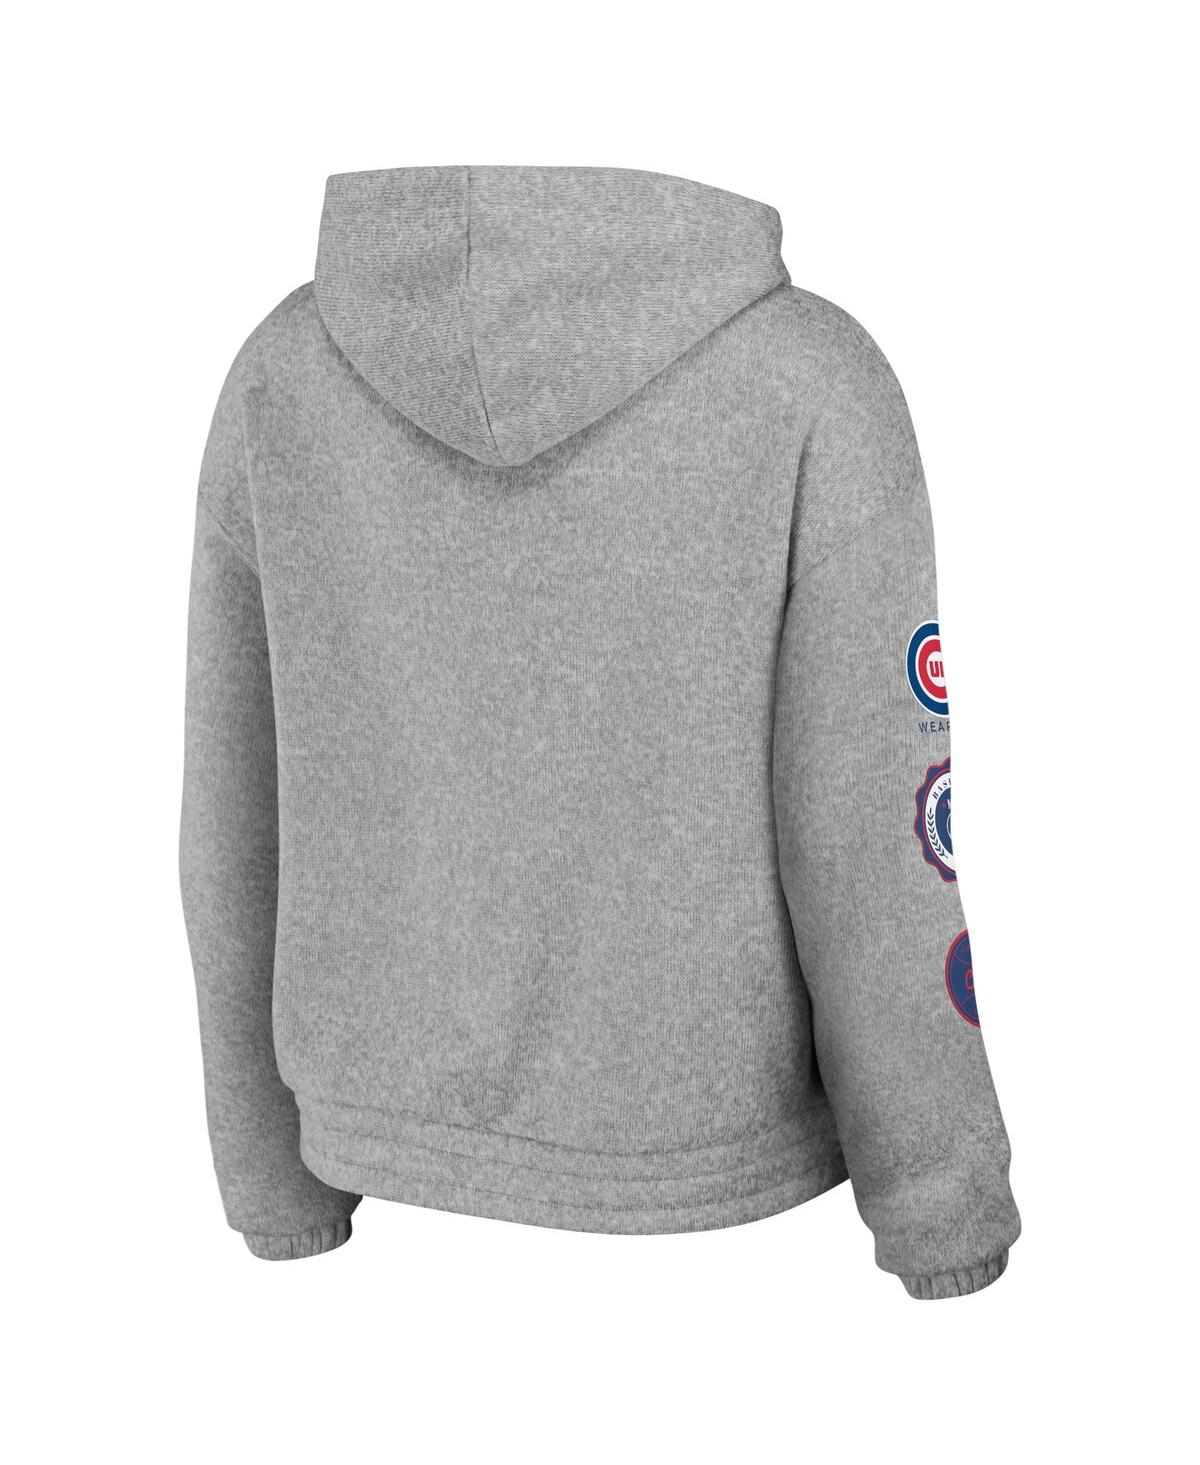 Shop Wear By Erin Andrews Women's  Gray Chicago Cubs Full-zip Hoodie